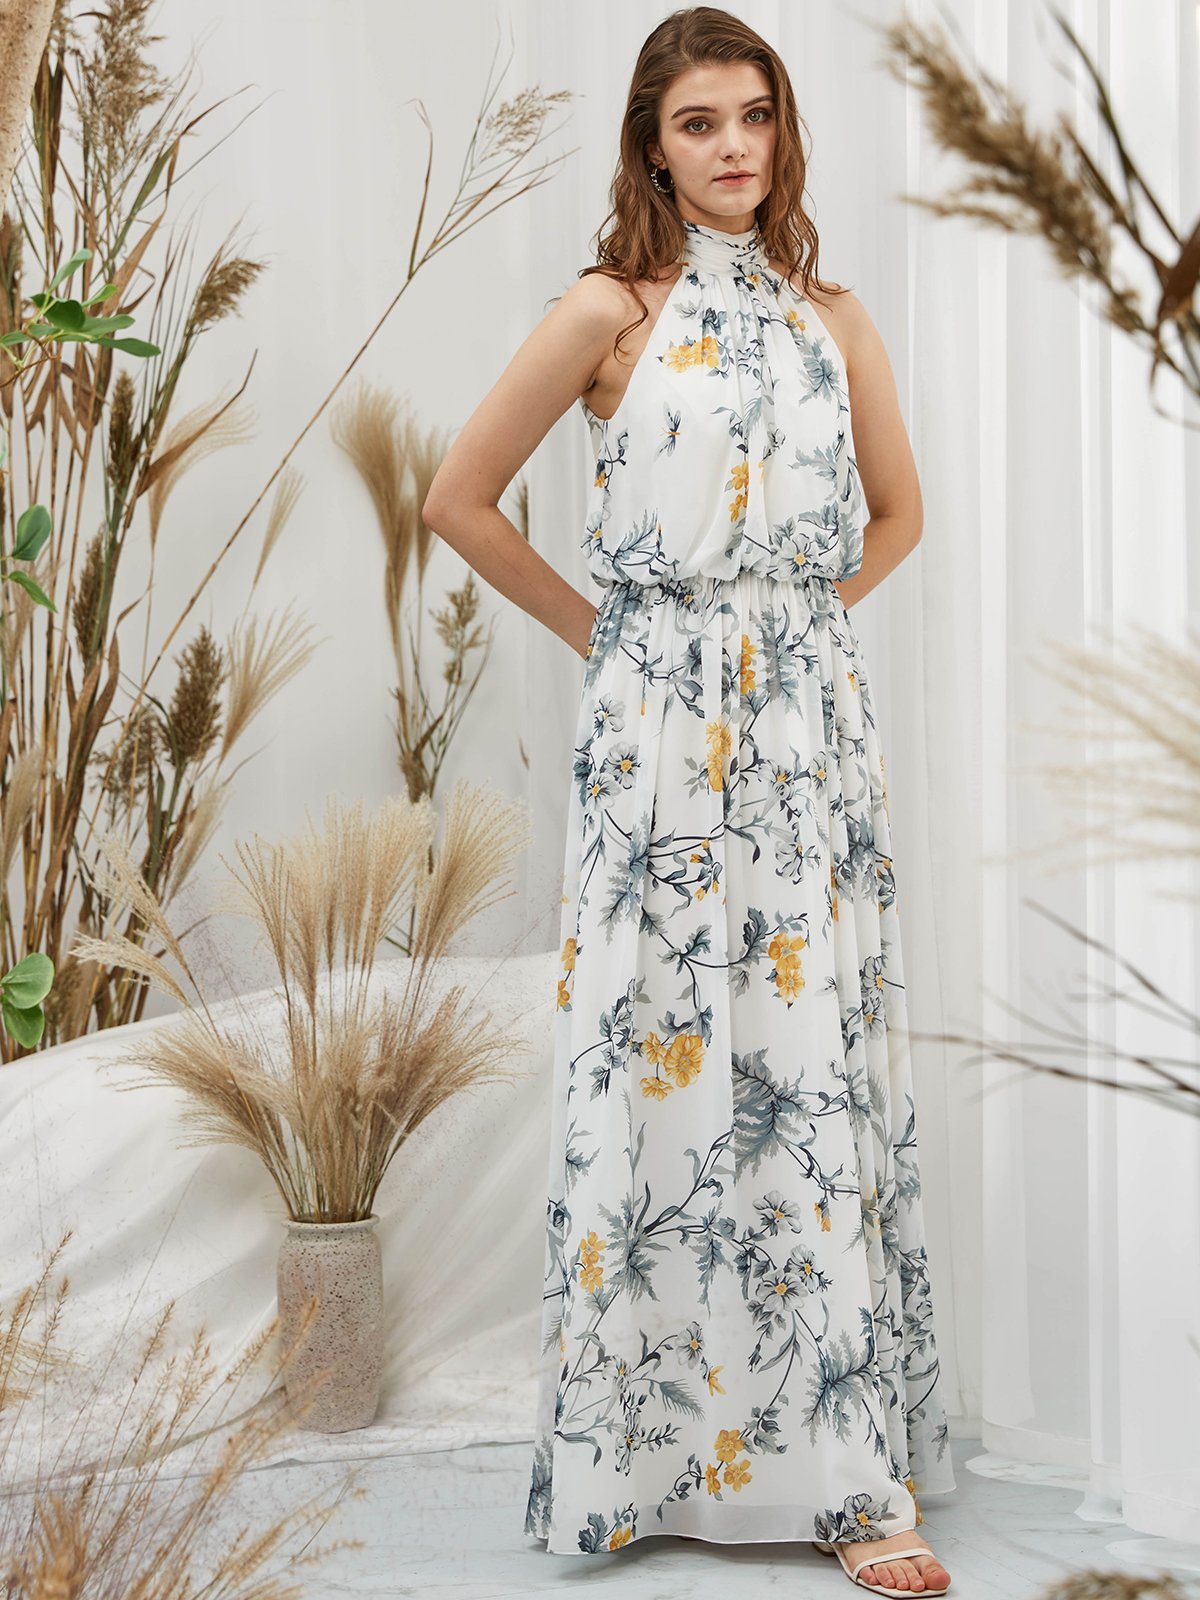 MissJophiel Halter High Neck Chiffon Print Floral Gray Tea Length Formal Gown